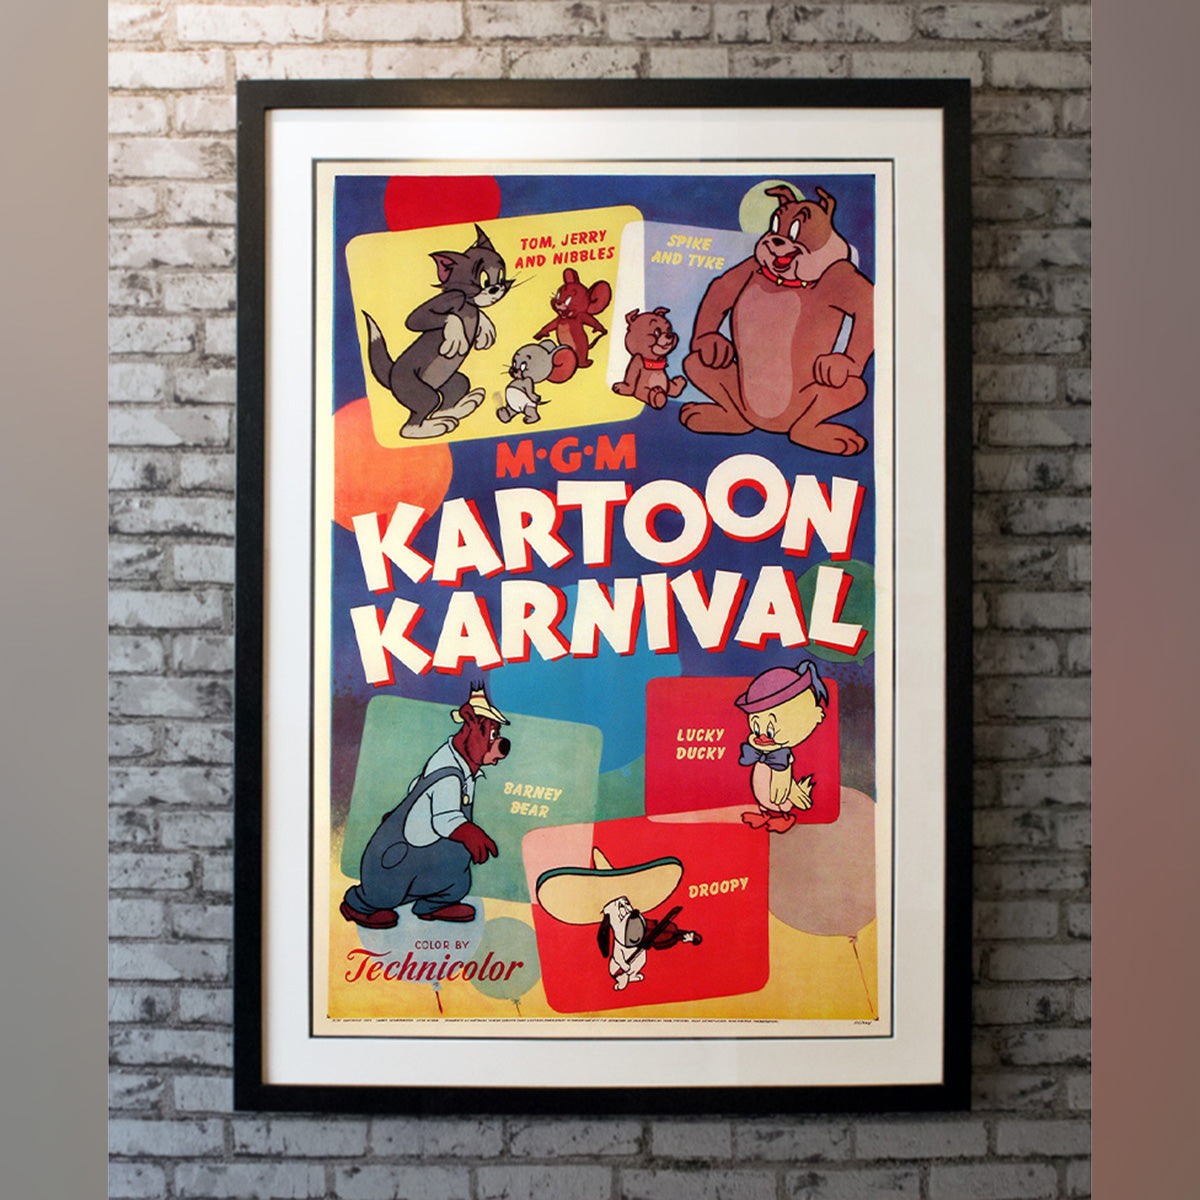 Original Movie Poster of Kartoon Karnival (1954)